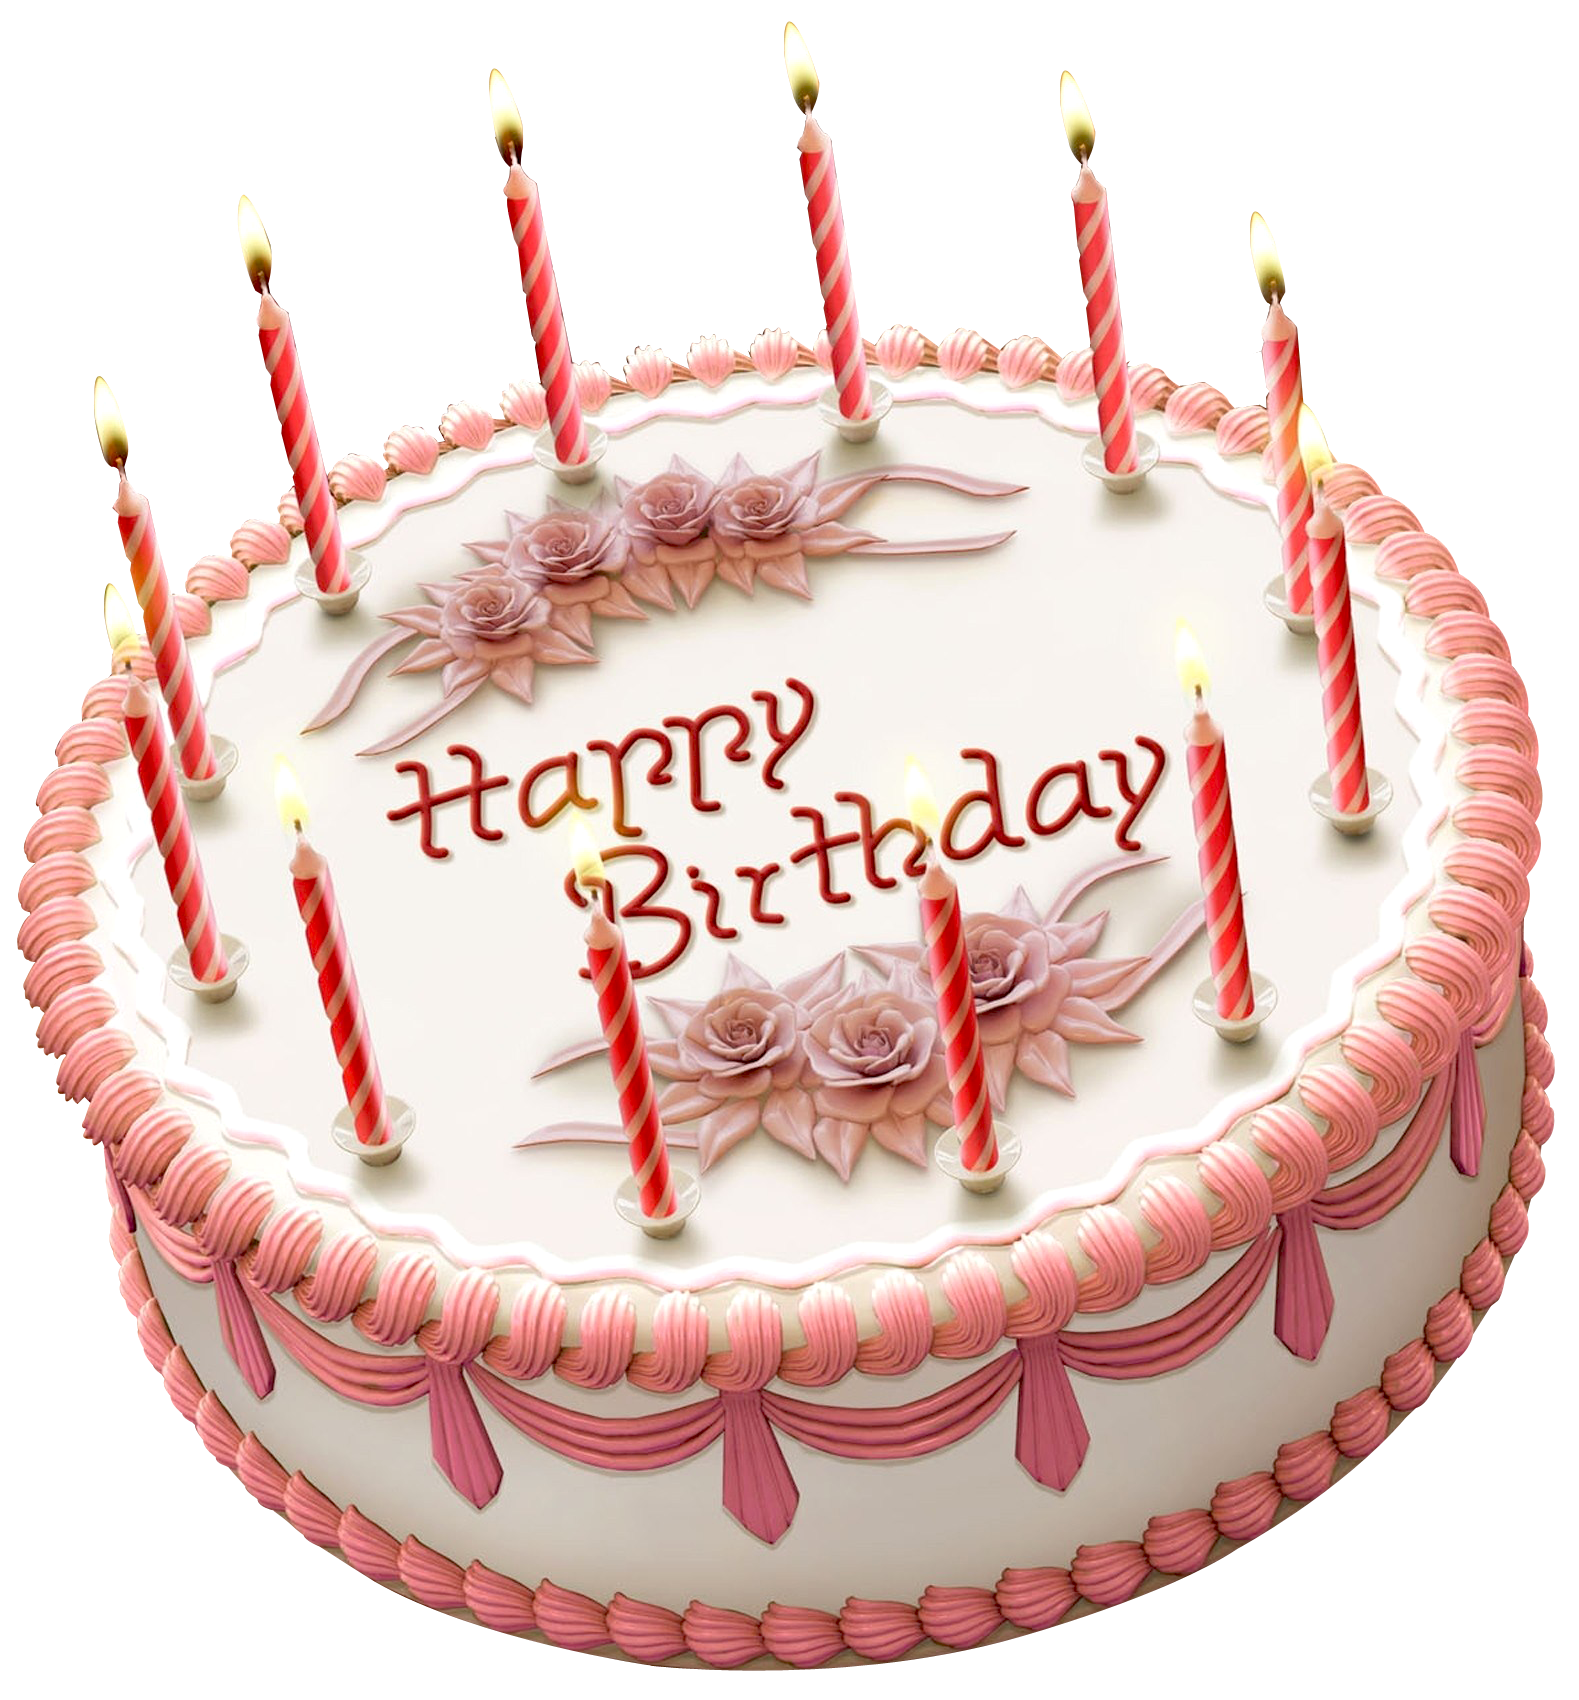 Download Birthday Cake Png Image HQ PNG Image | FreePNGImg